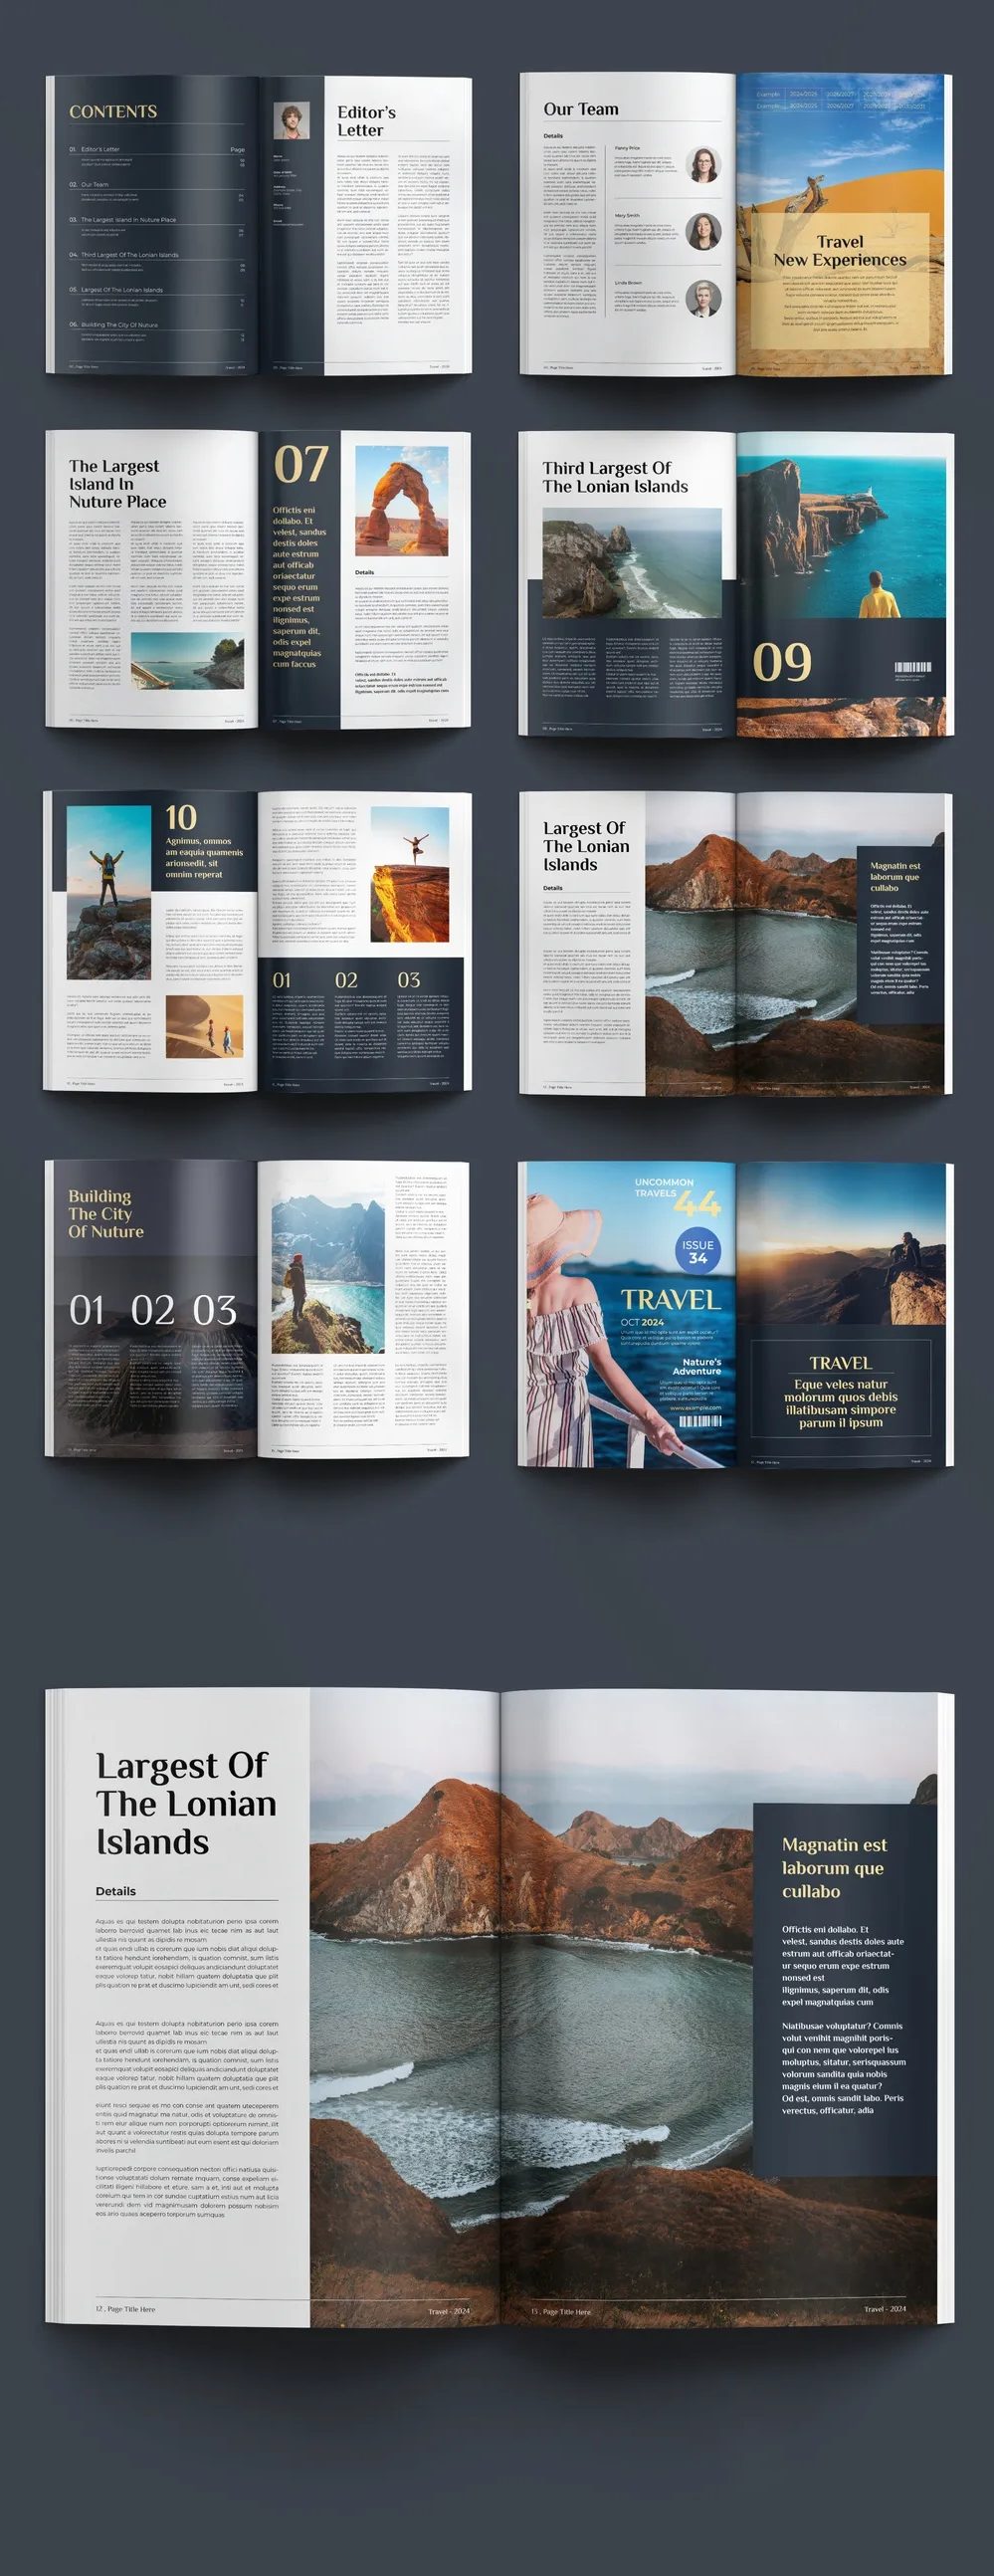 Adobestock - Travel Magazine Layout 716564906